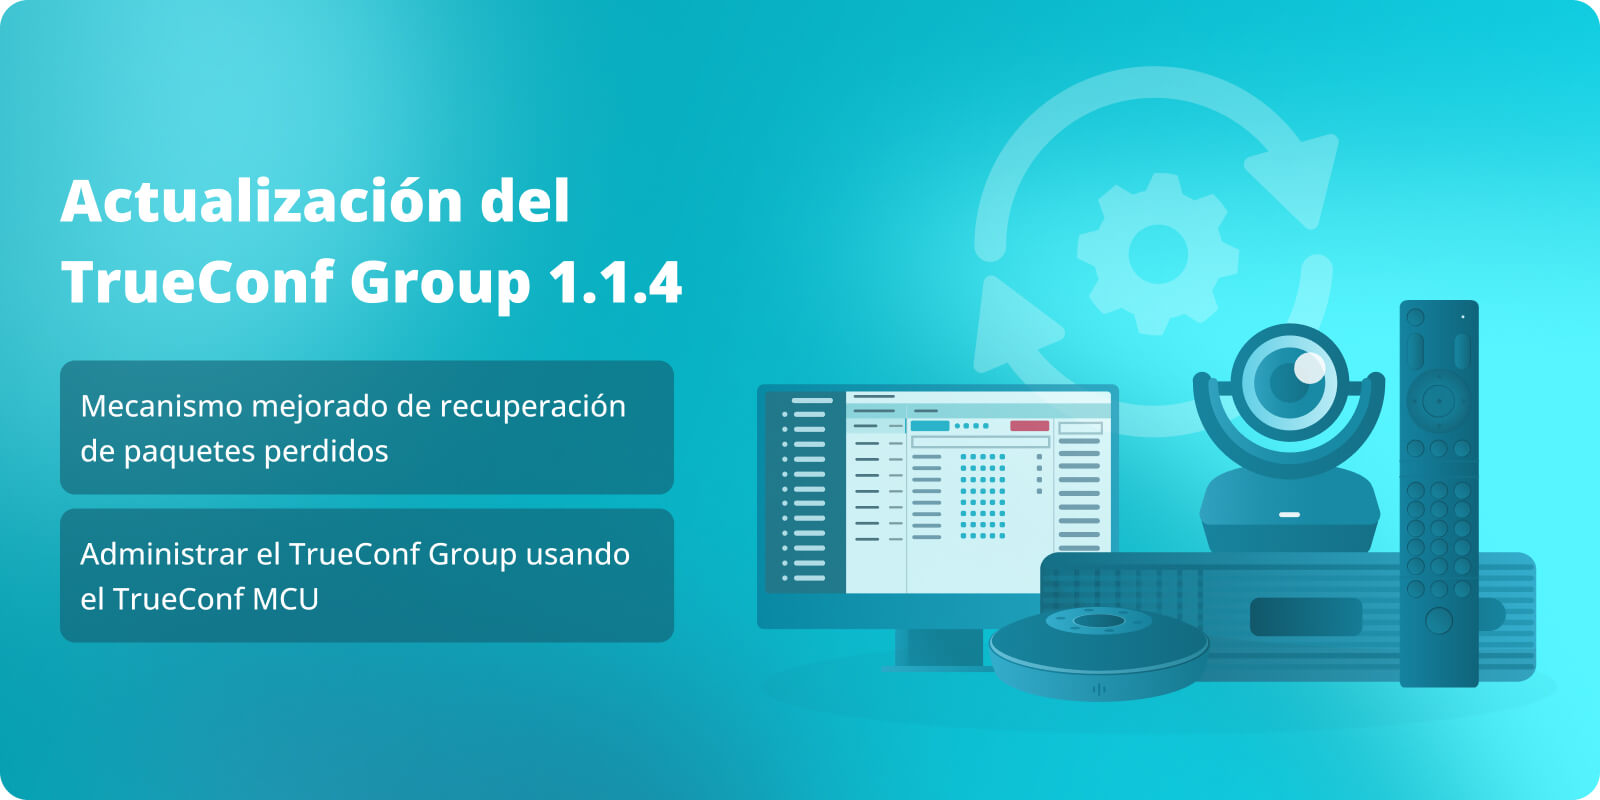 TrueConf Group 1.1.4: mecanismo de recuperación mejorado para paquetes perdidos e integración con TrueConf MCU 2